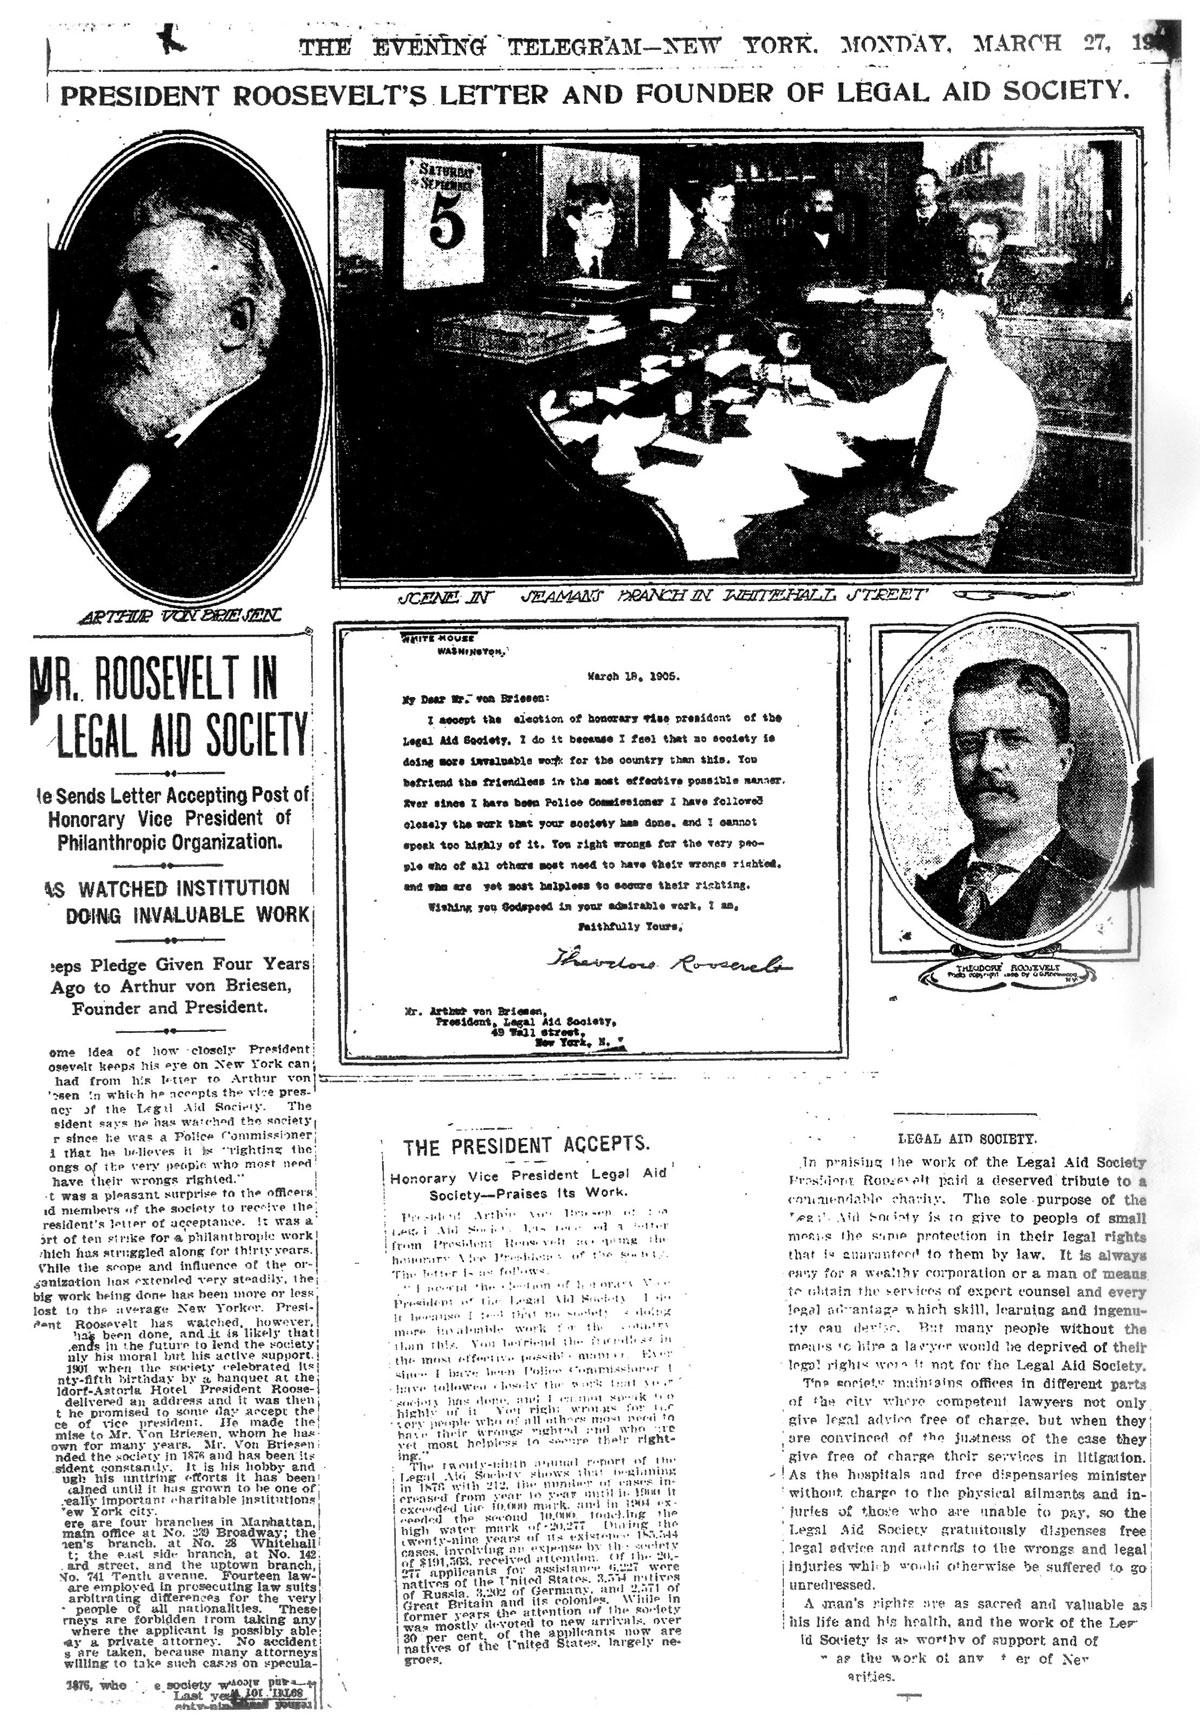 Articles in the Evening Telegram